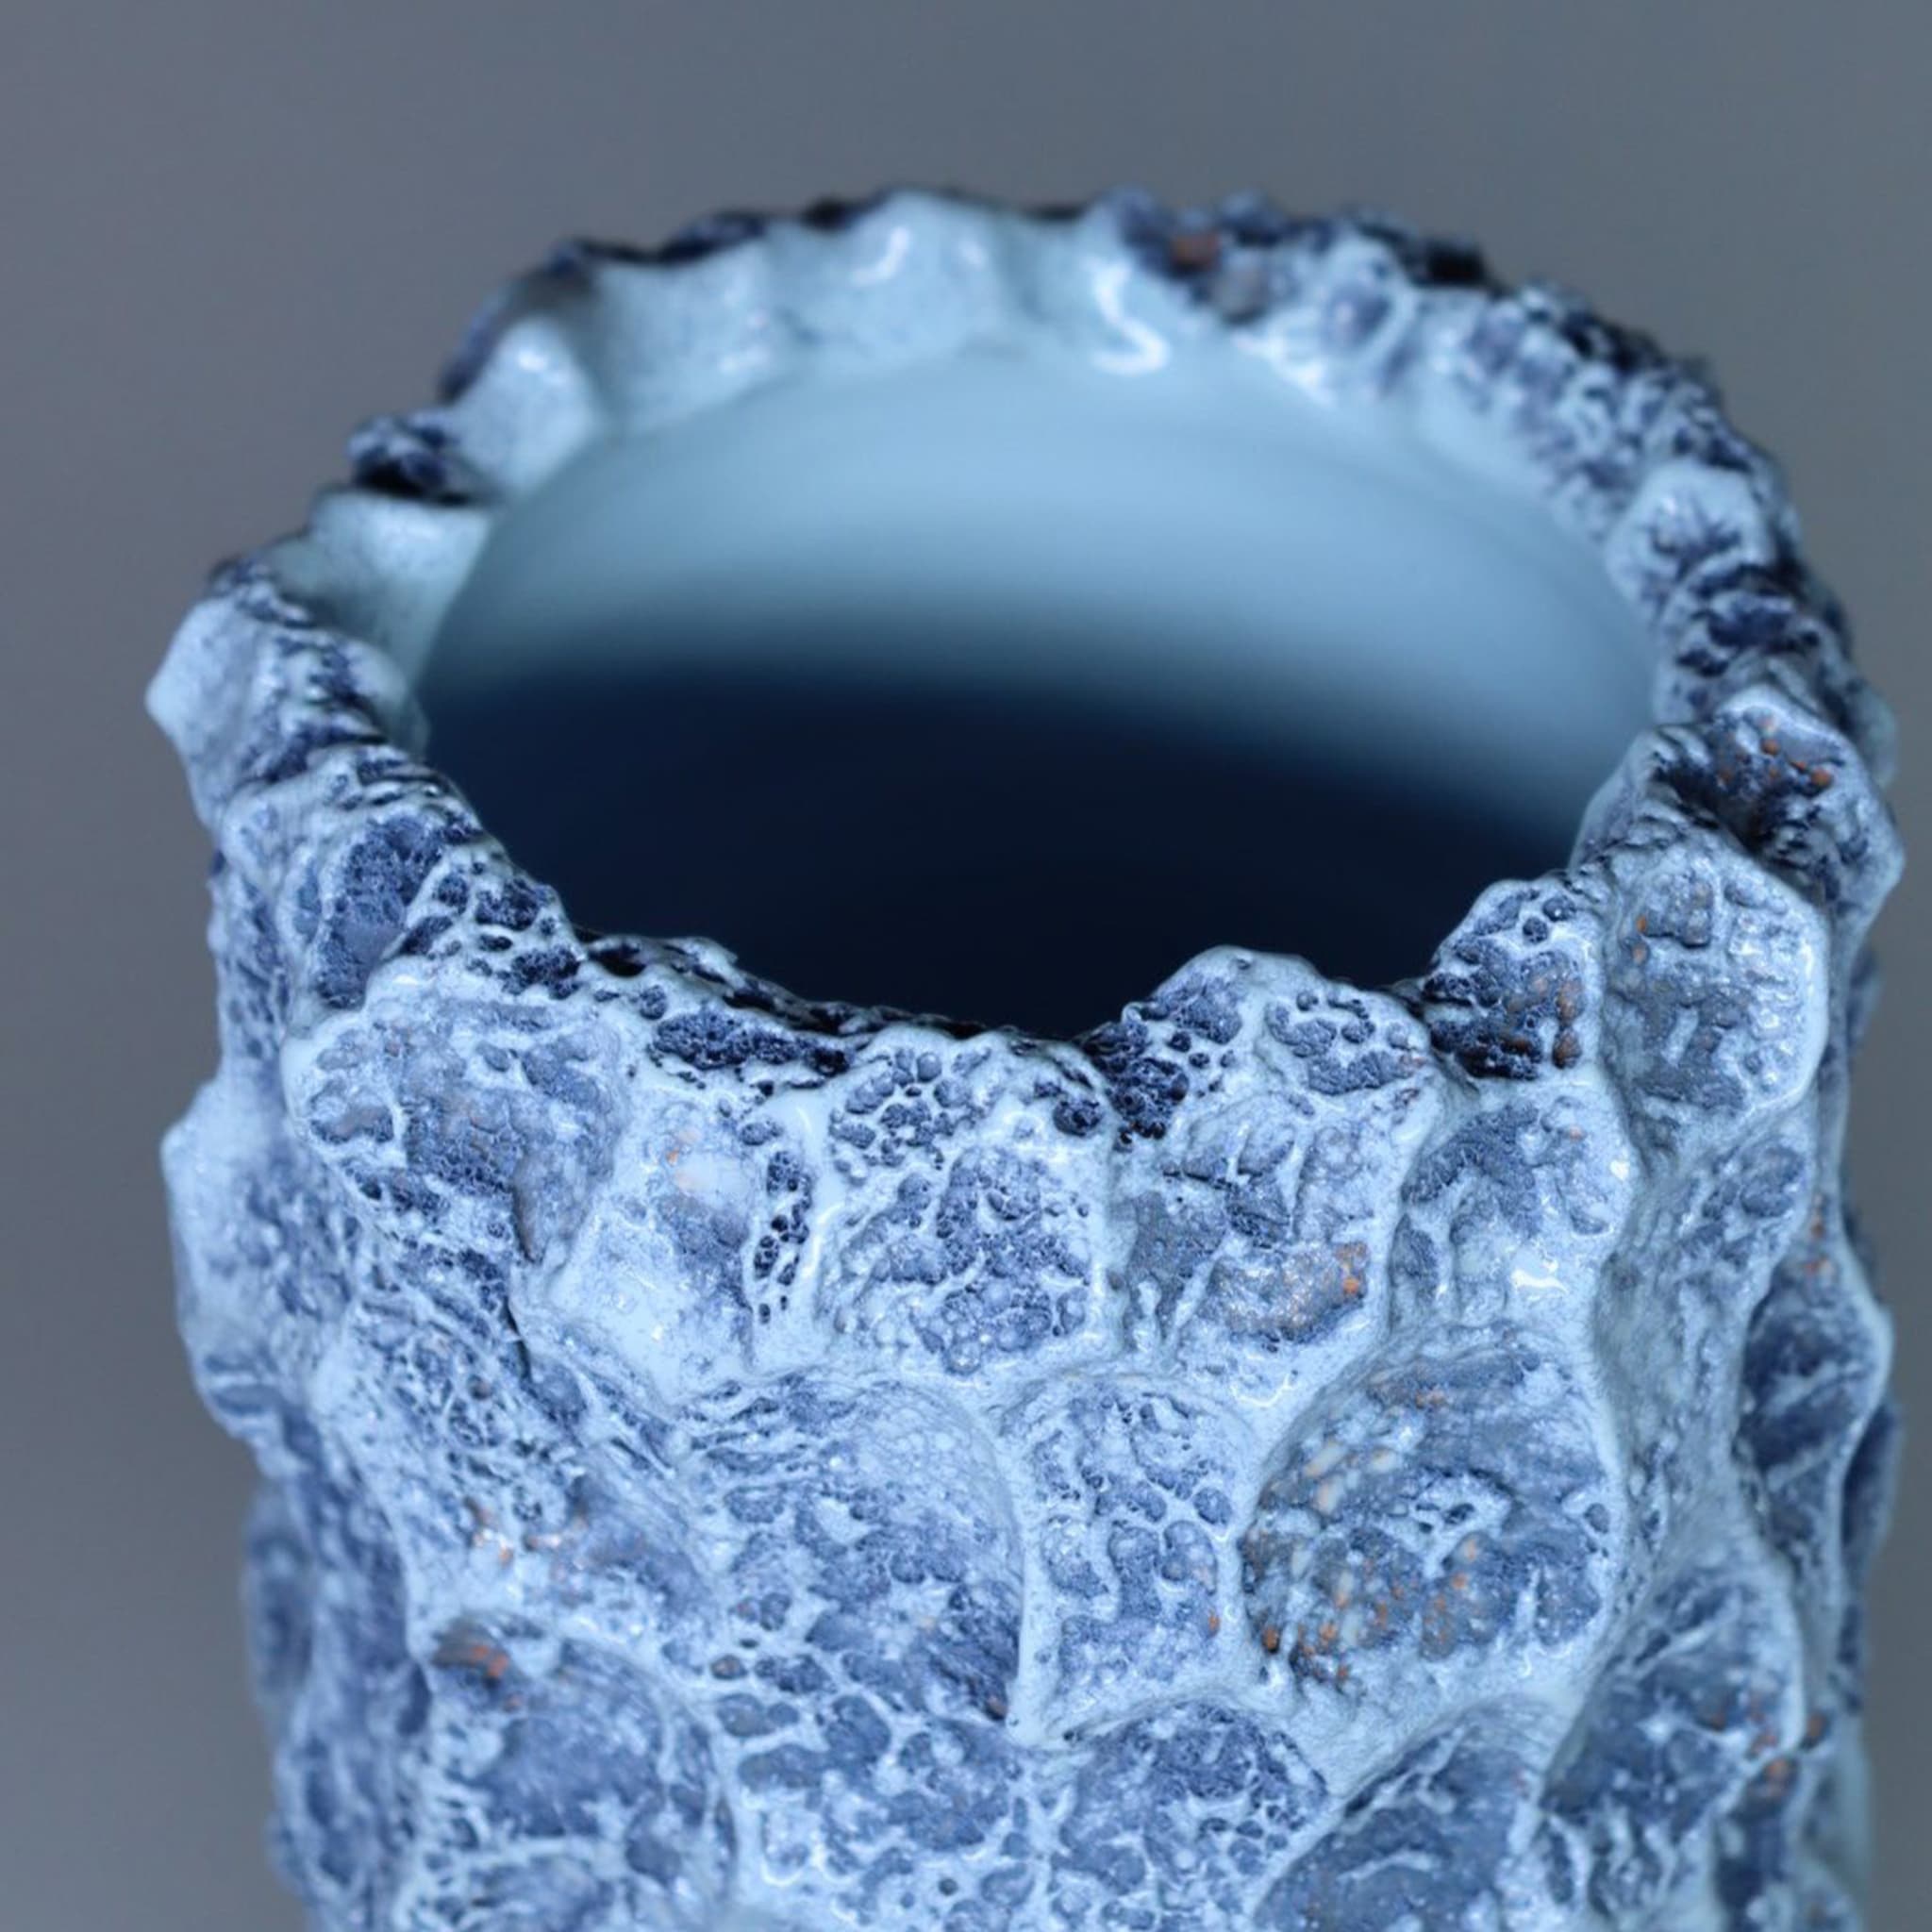 Oxymoron Light Blue Vase by Patricia Urquiola - Alternative view 2